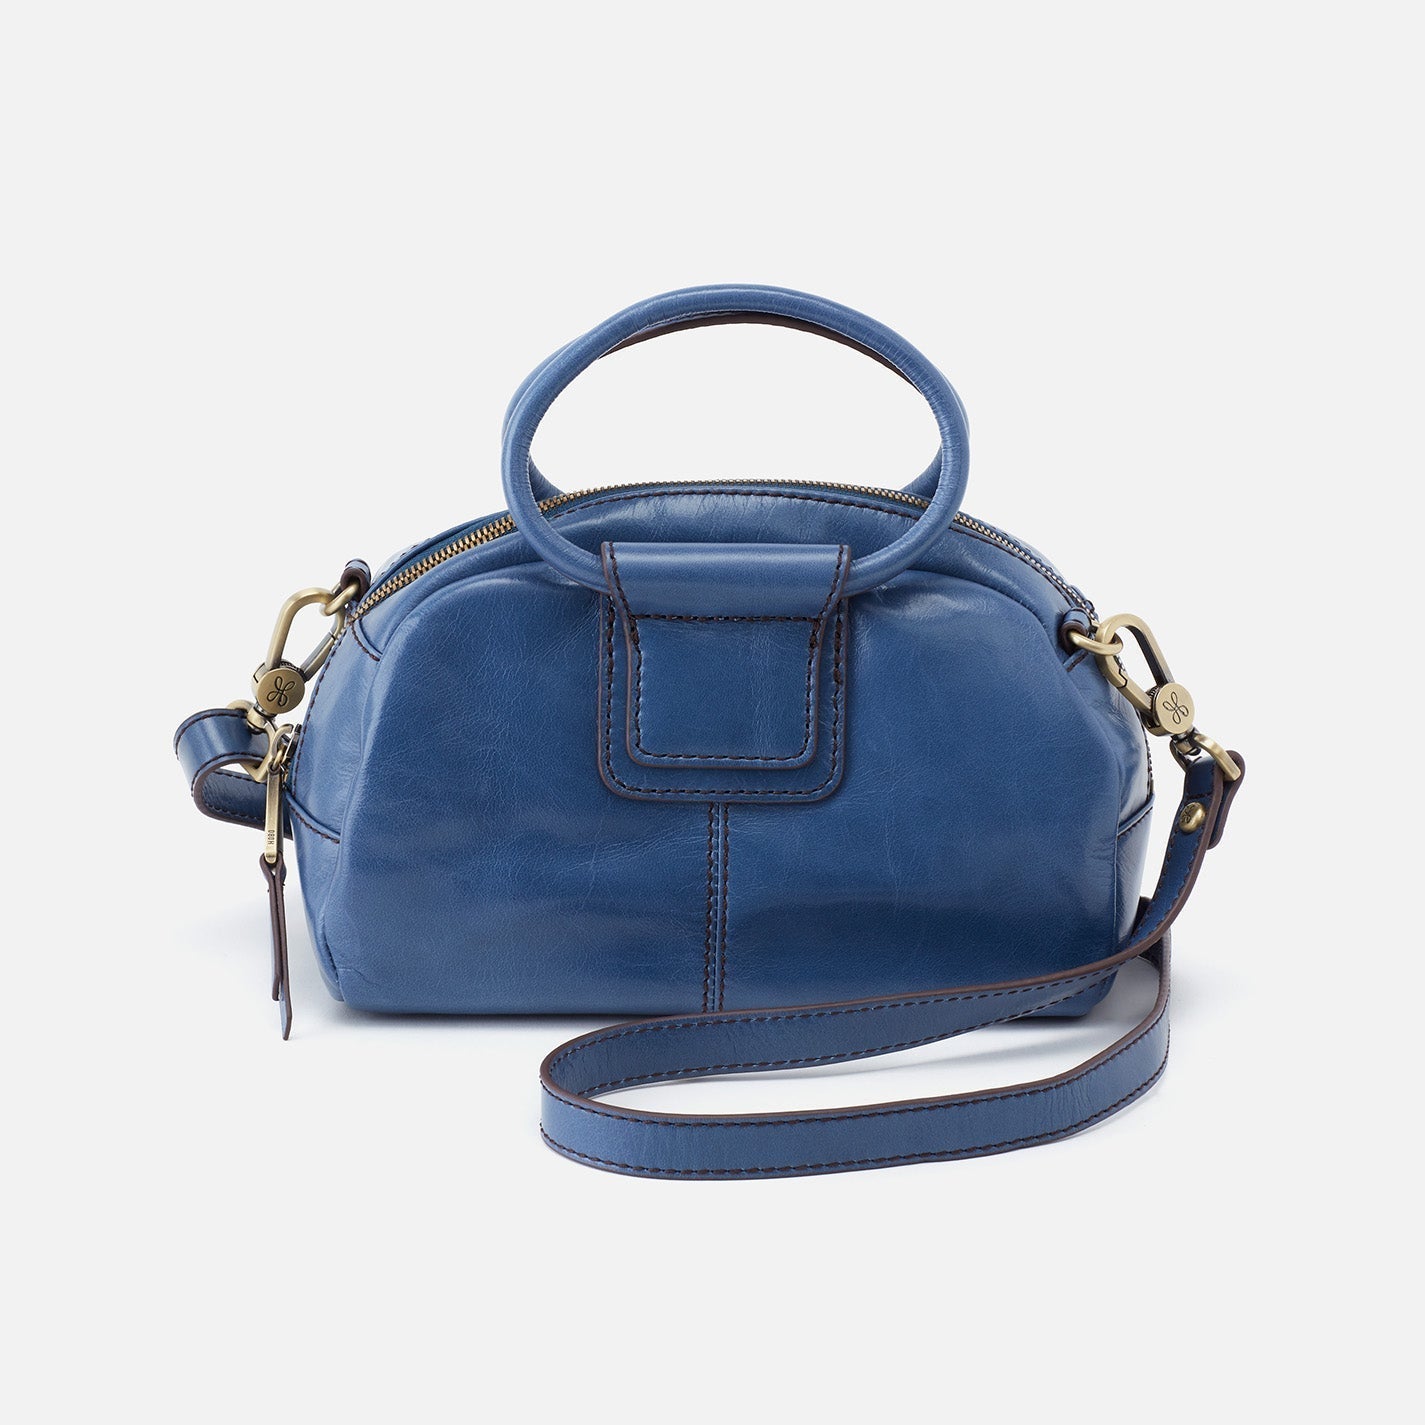 TOP. M95567 EVA CLUTCH Designer Lady Handbag Purse Hobo Satchel